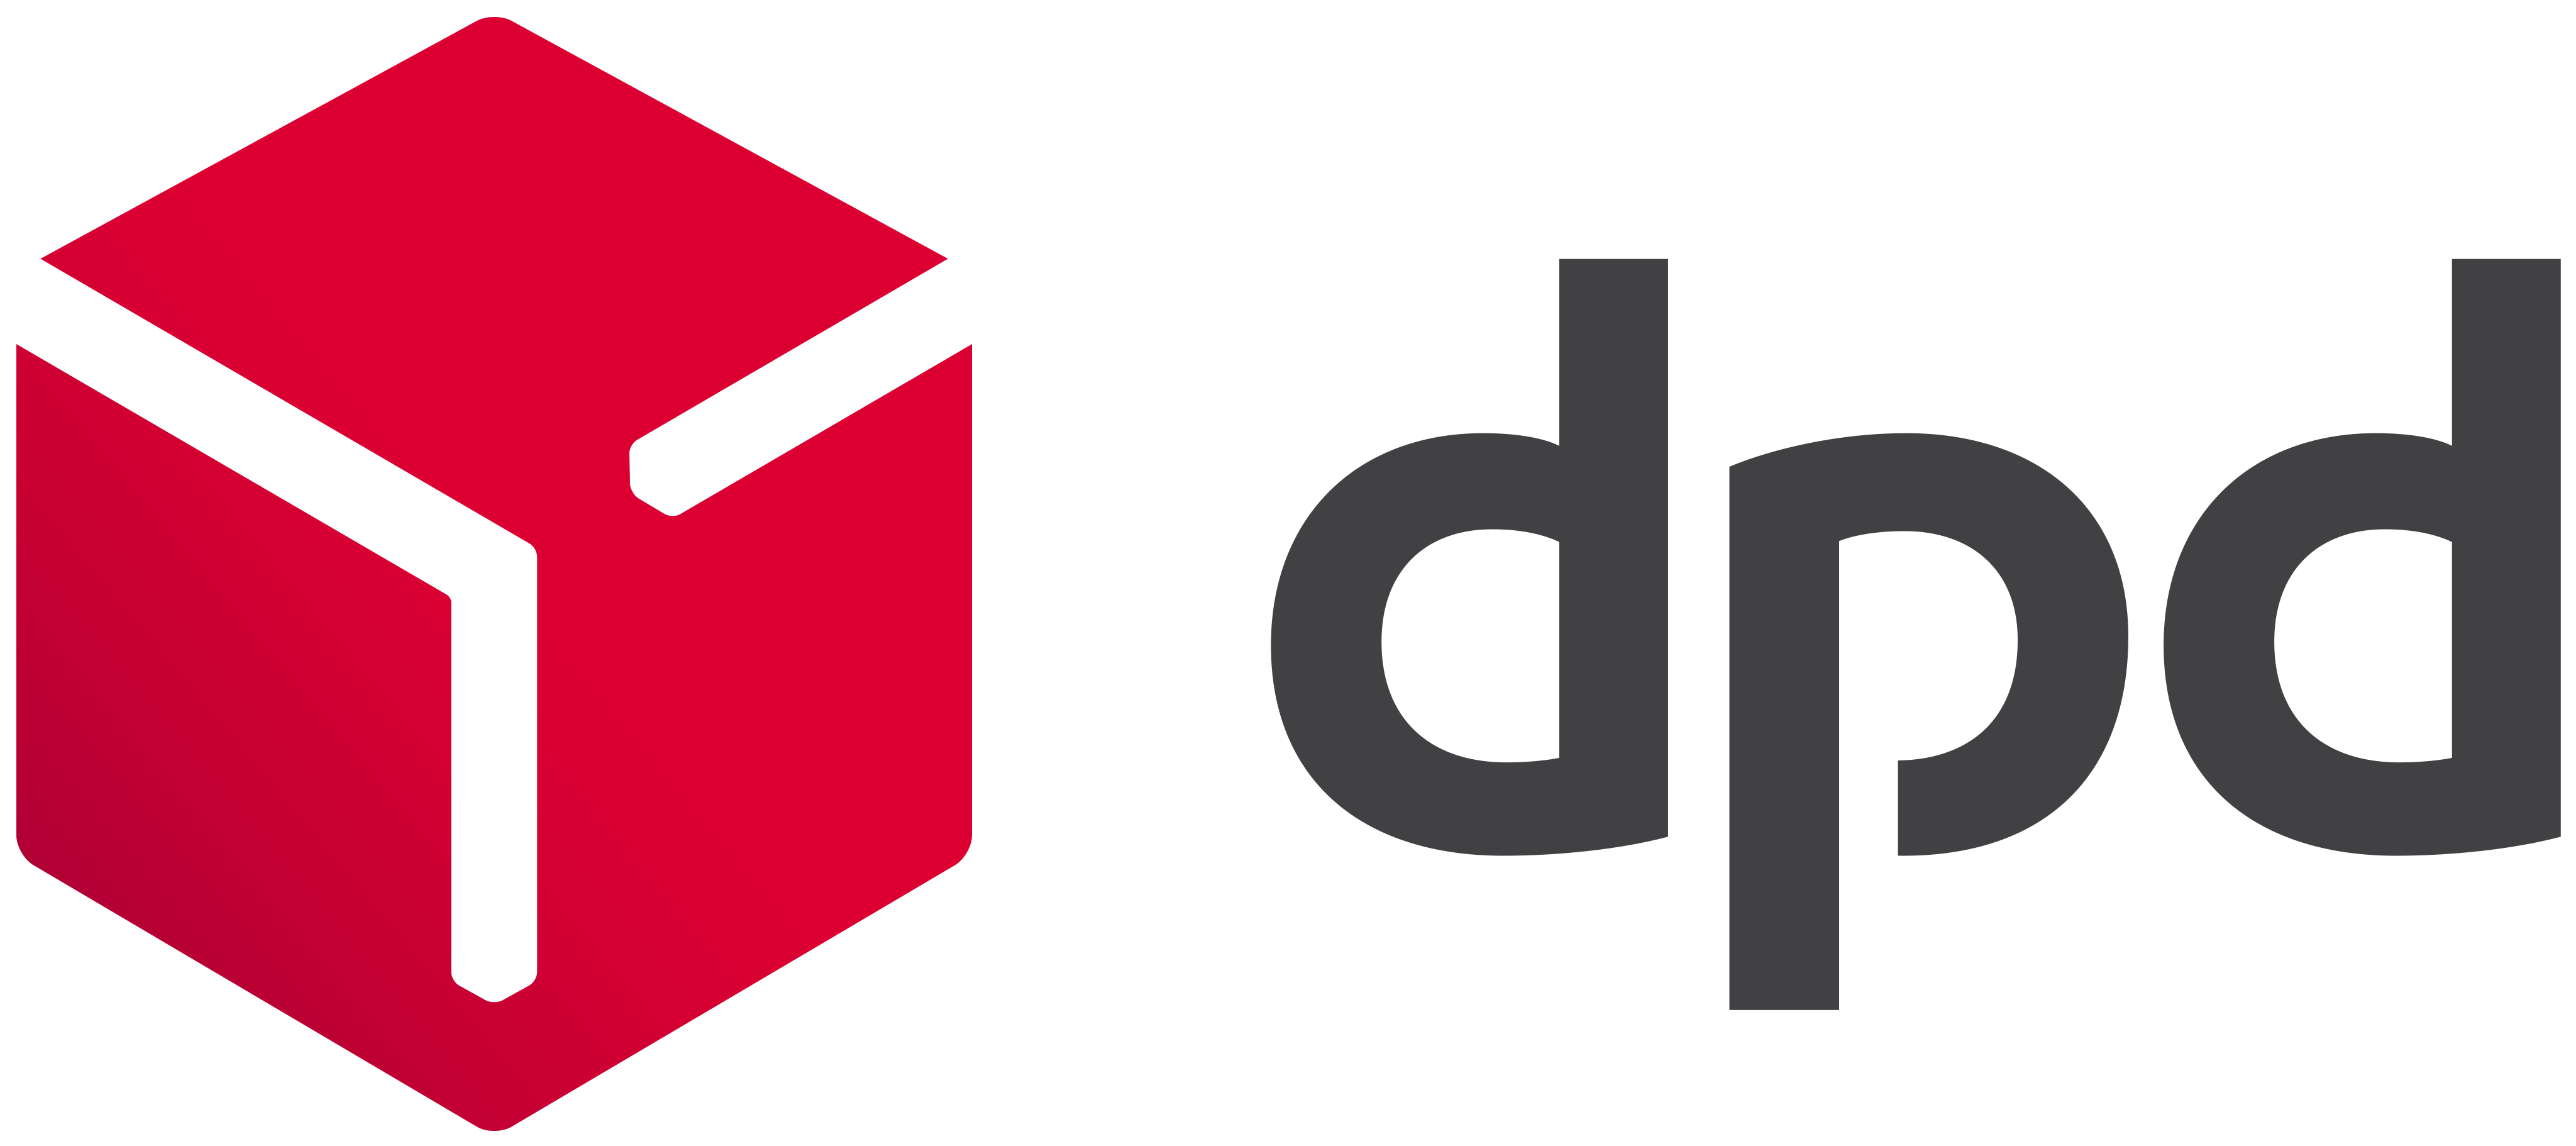 DPD Versand Logo